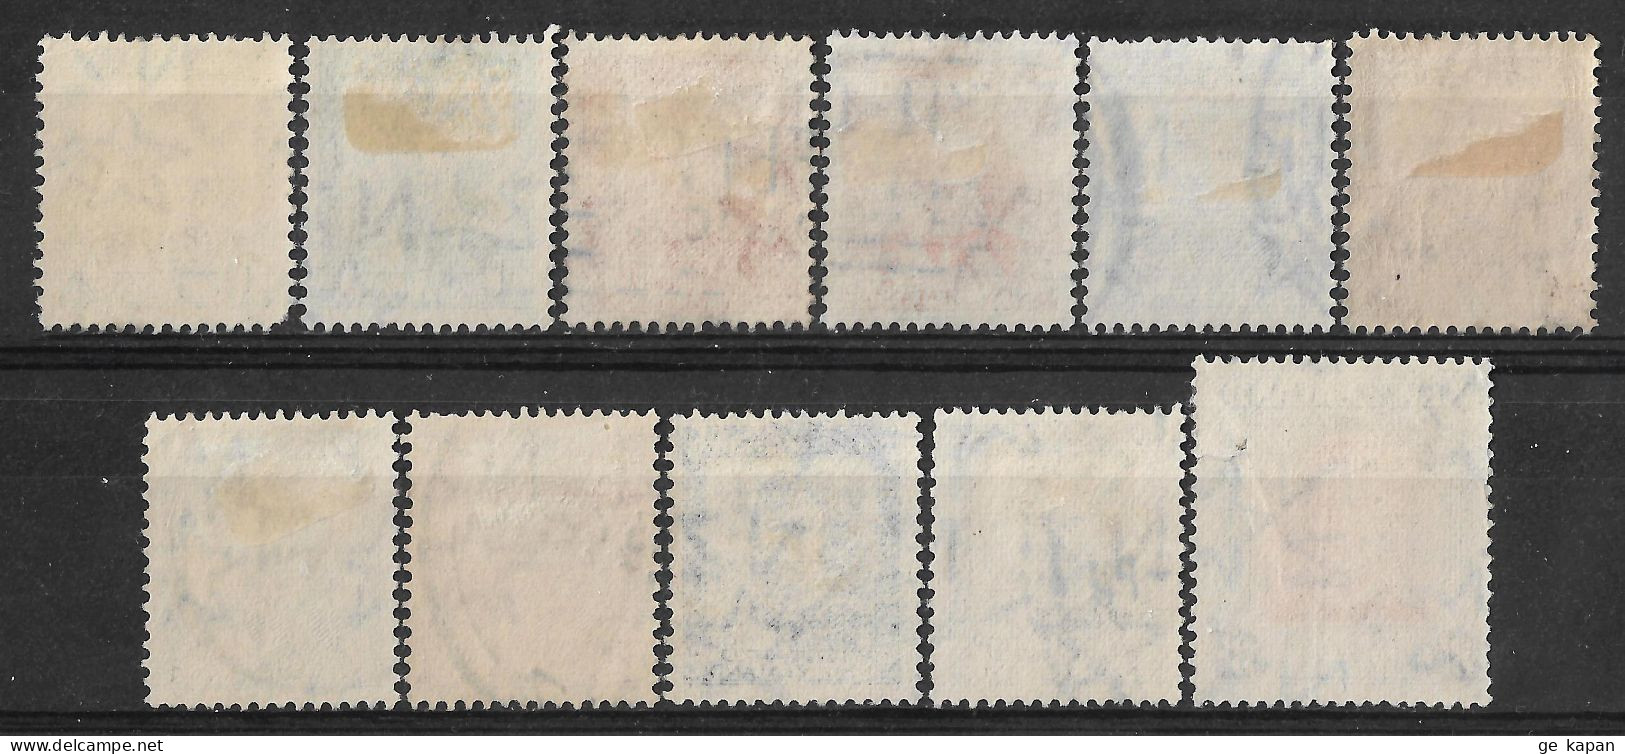 1938-1947 NEW ZEALAND Set Of 11 Used Stamps (Scott # 227A,228B,228C,258,260-264,268) CV $4.40 - Oblitérés